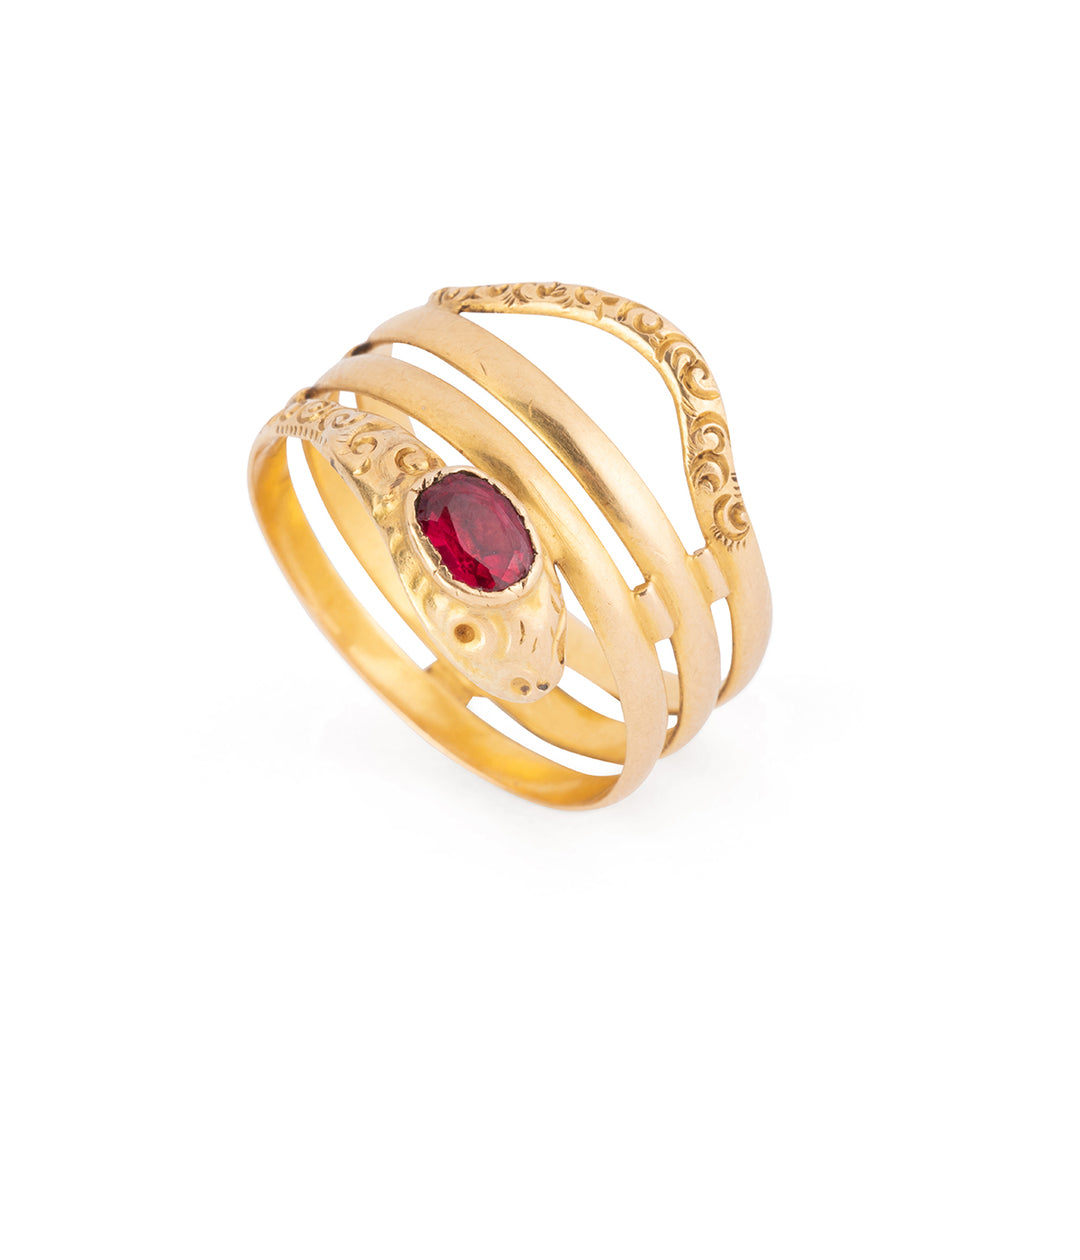 Victorian gold snake ring "Taupo" - Caillou Paris